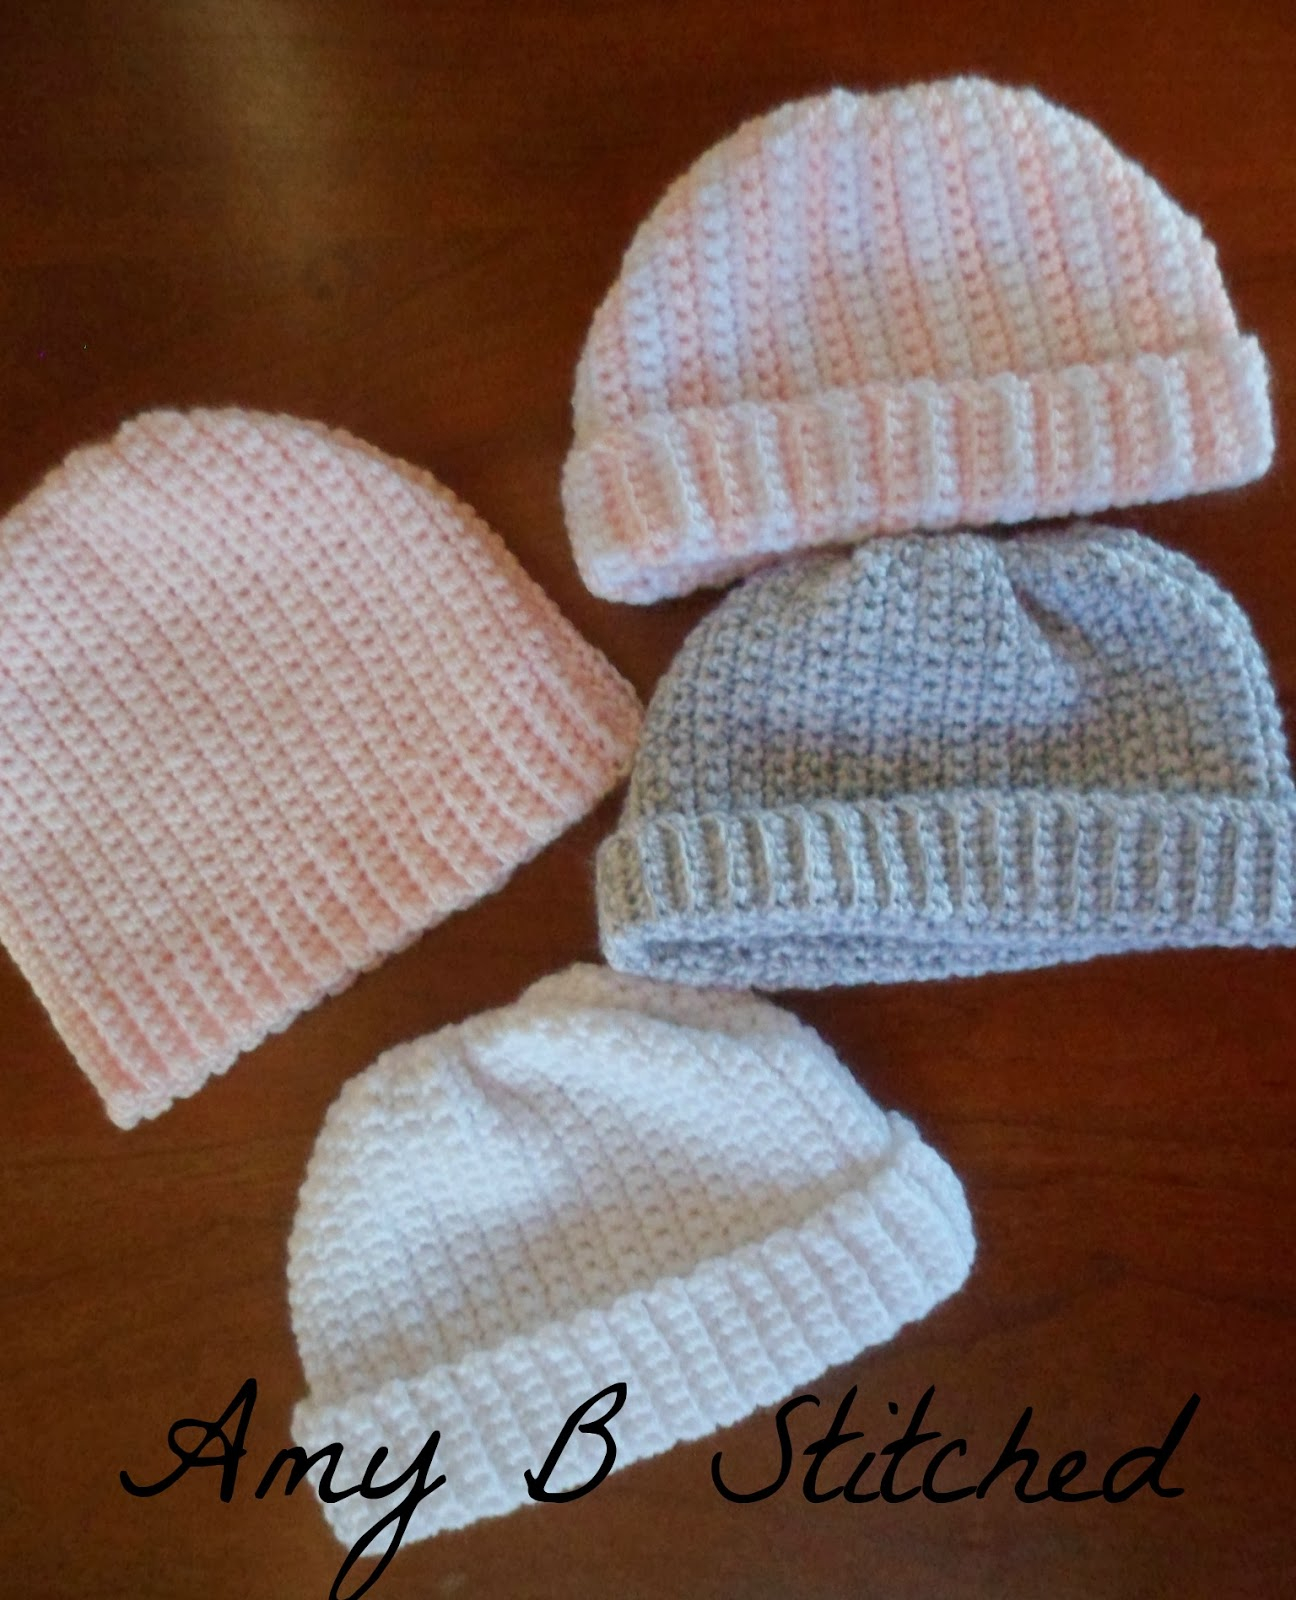 Free Knitting Patterns For Newborn Hats A Stitch At A Time For Amy B Stitched Newborn Crochet Hat Pattern